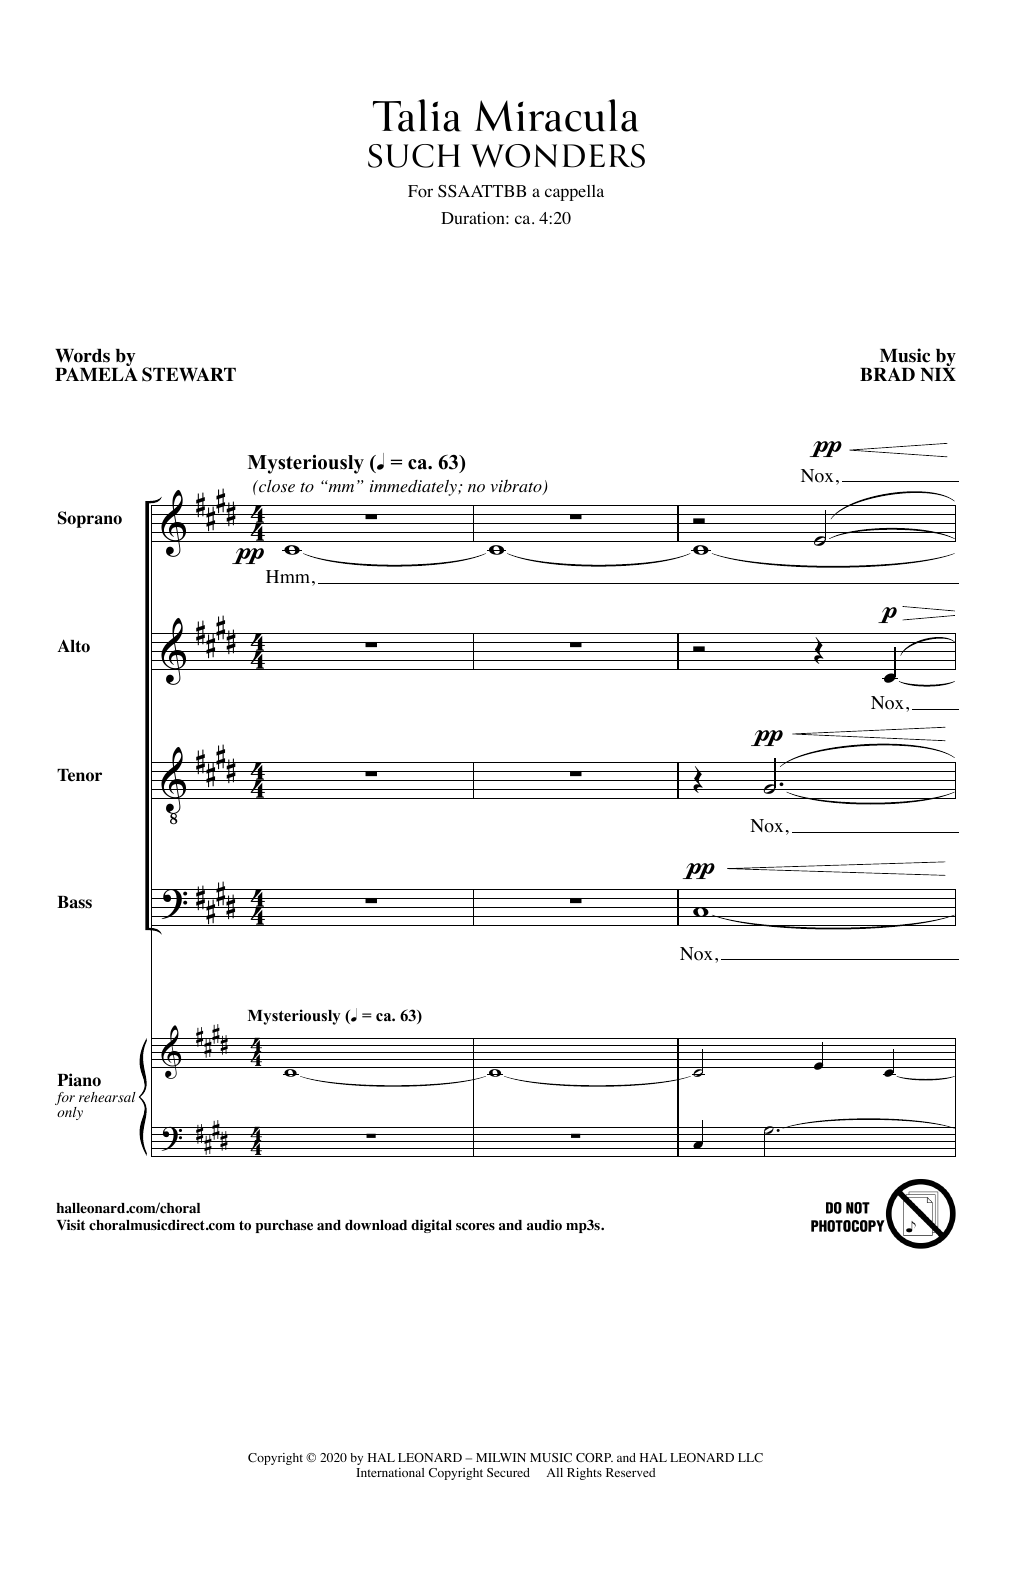 Pamela Stewart and Brad Nix Talia Miracula (Such Wonders) Sheet Music Notes & Chords for SATB Choir - Download or Print PDF